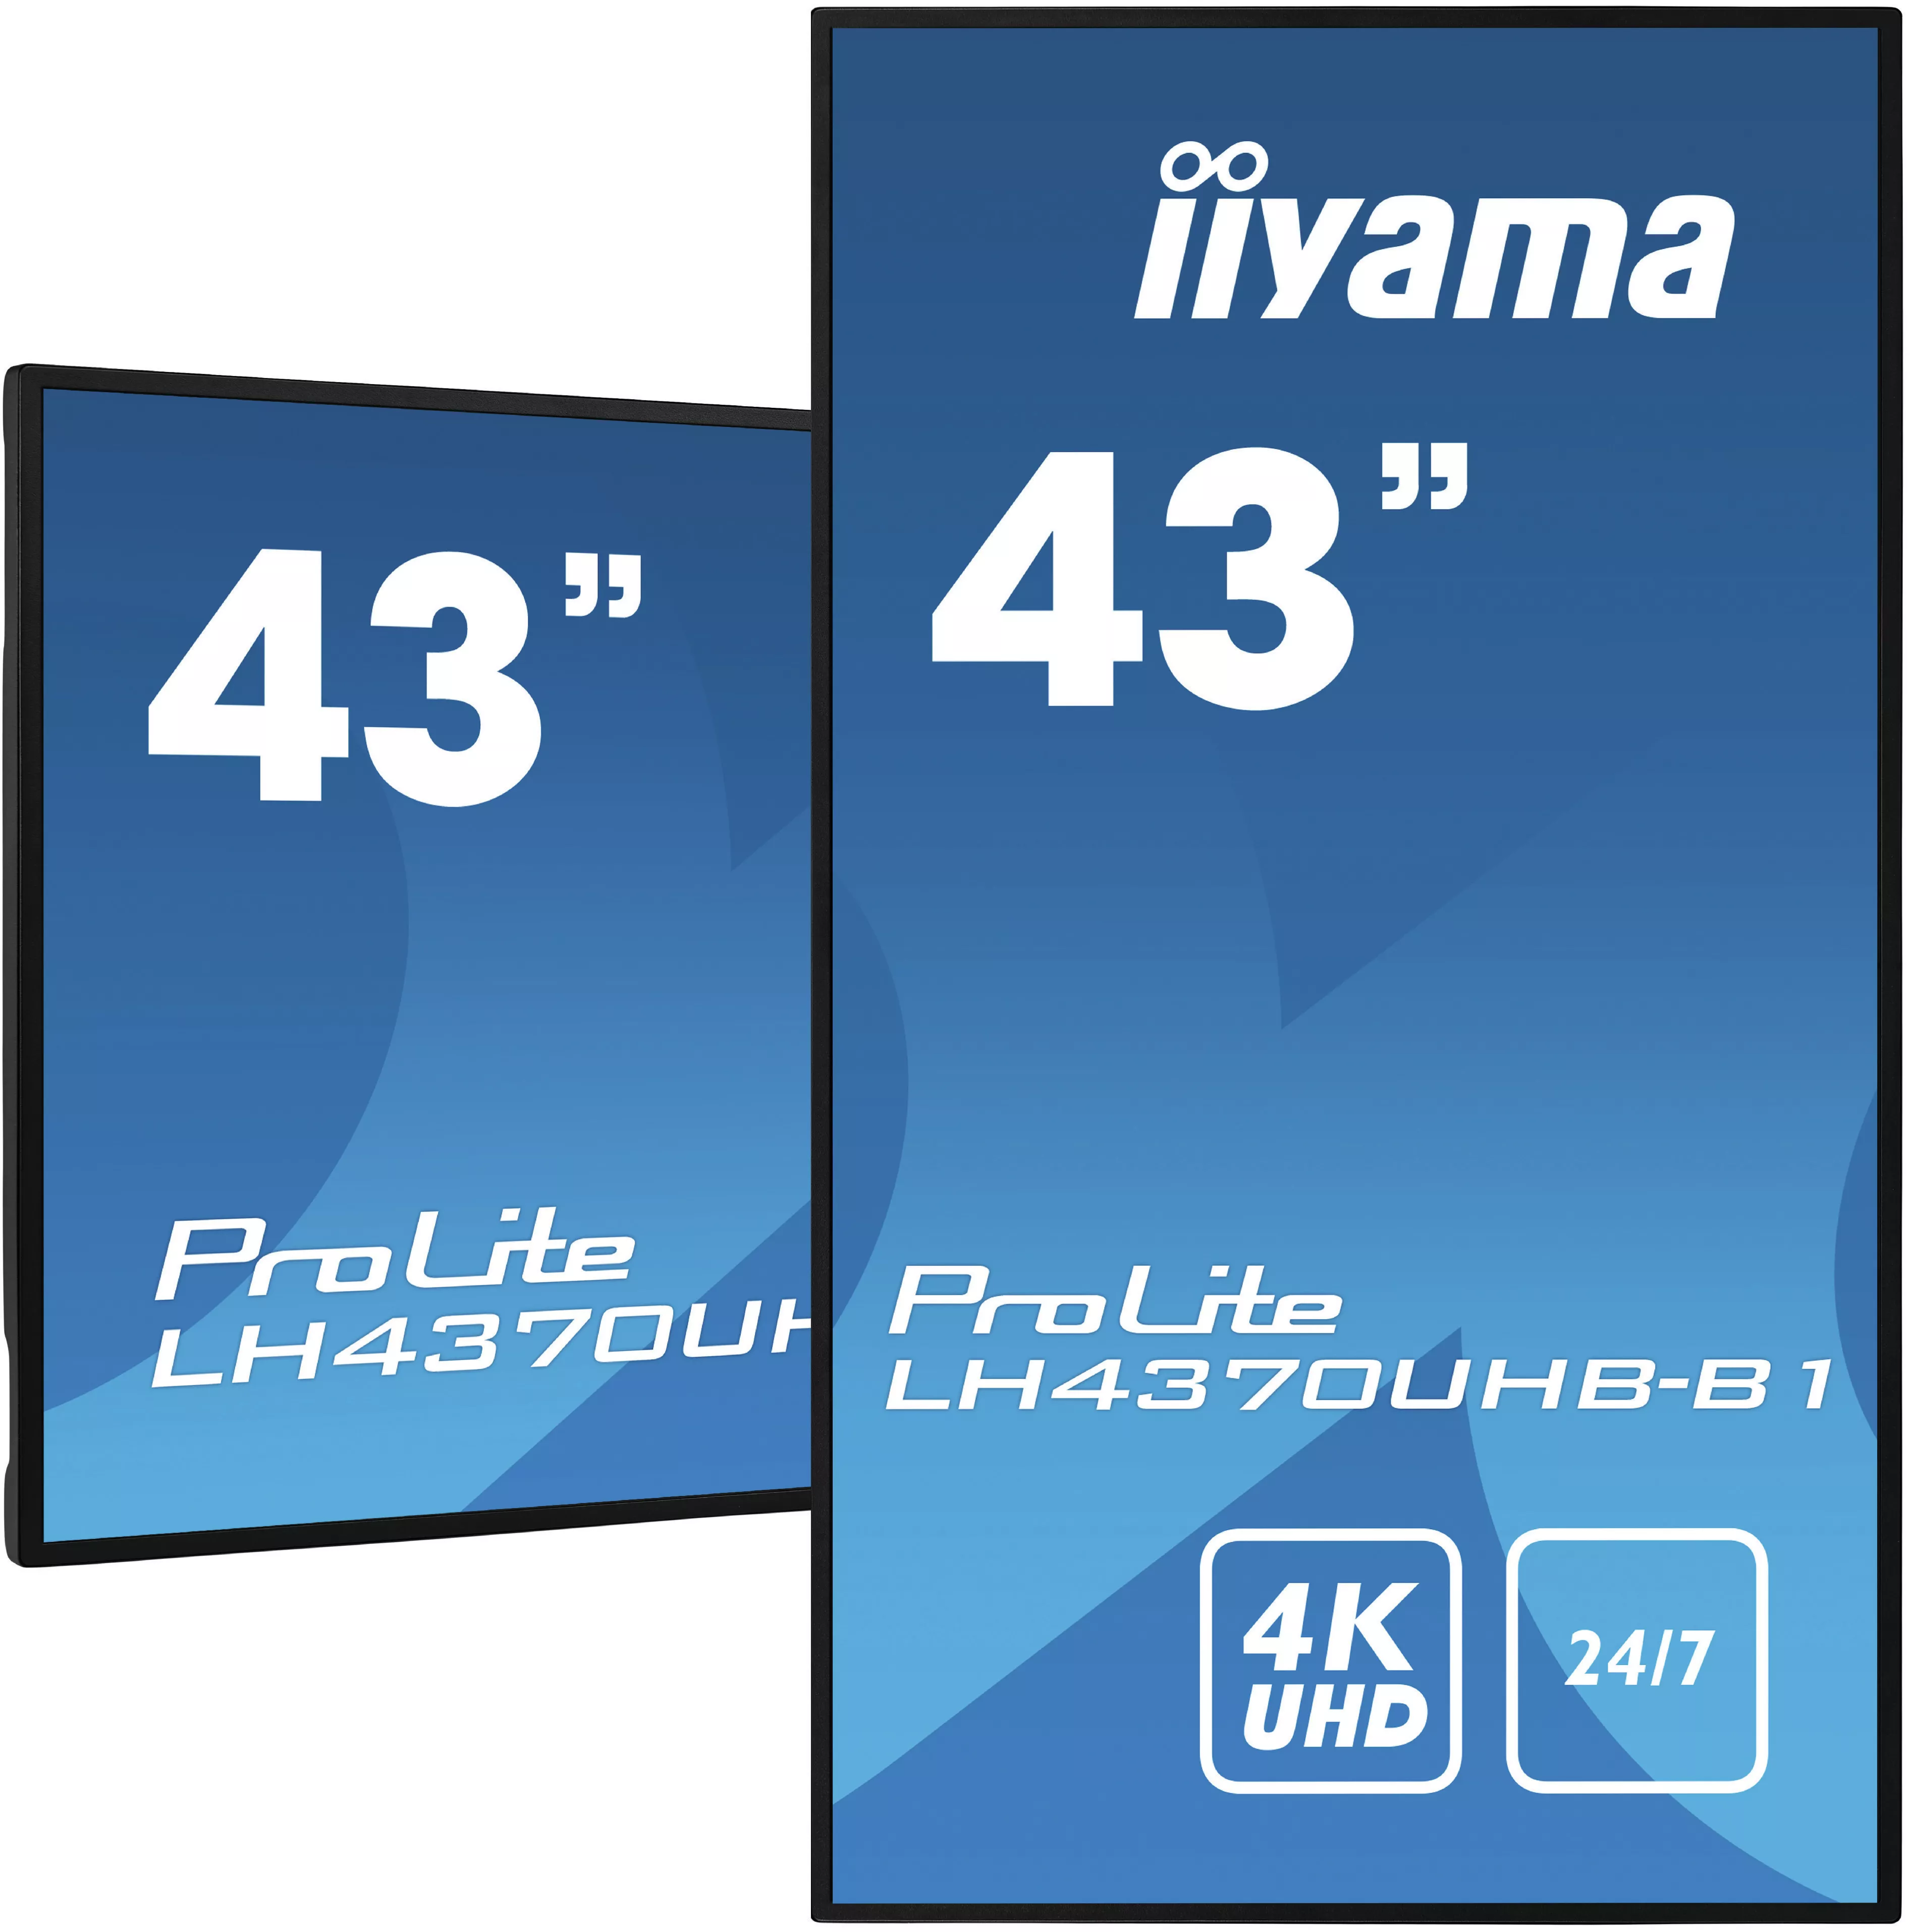 Vente iiyama LH4370UHB-B1 iiyama au meilleur prix - visuel 4